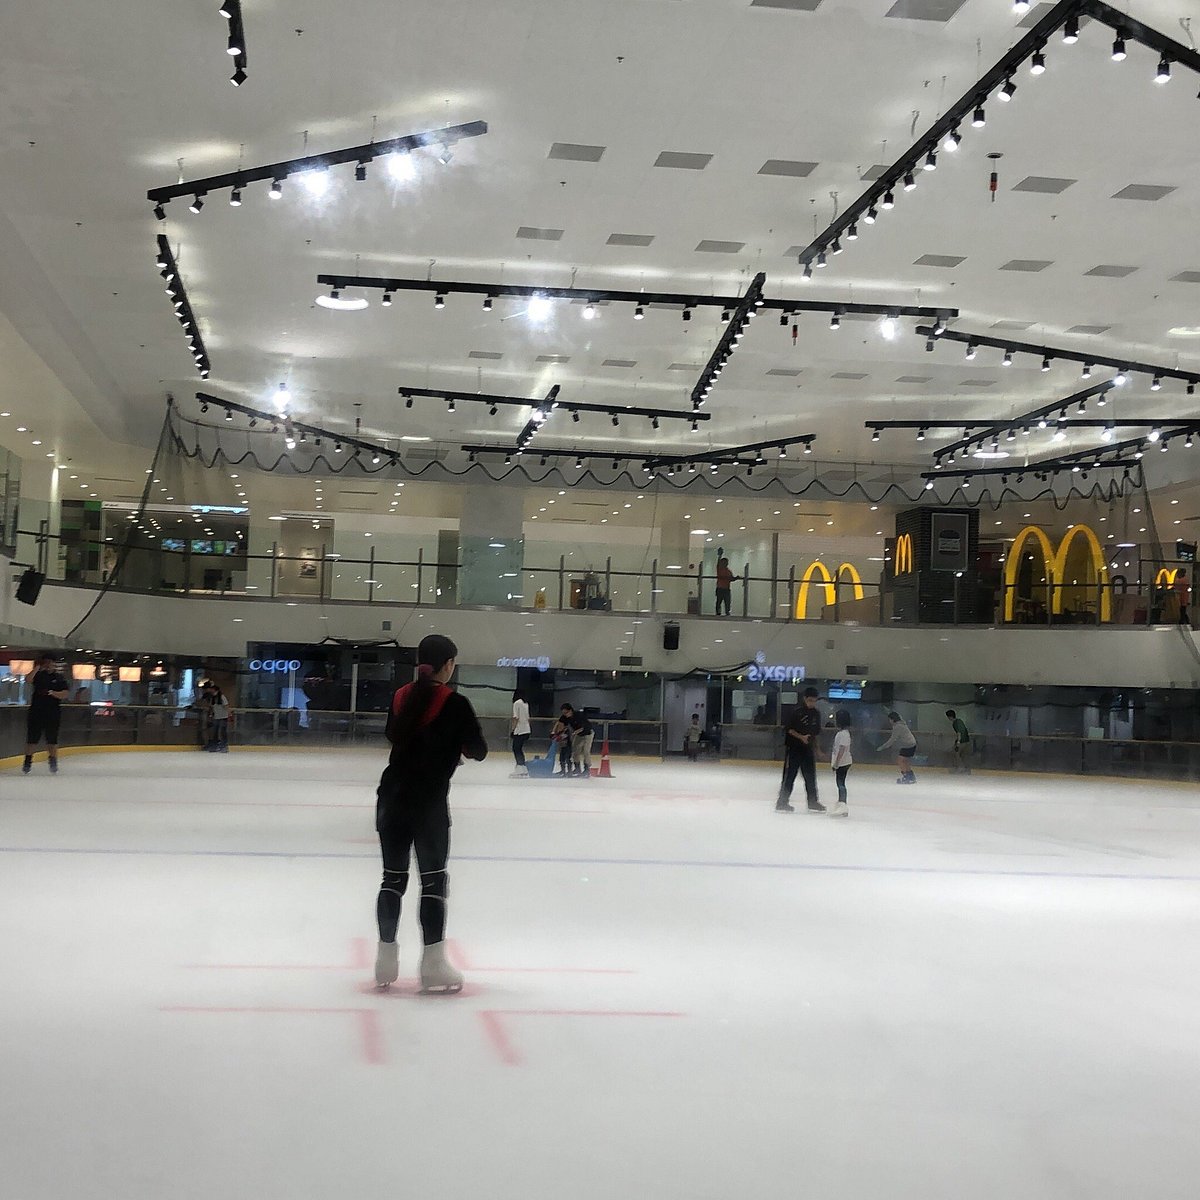 Ice skating aeon